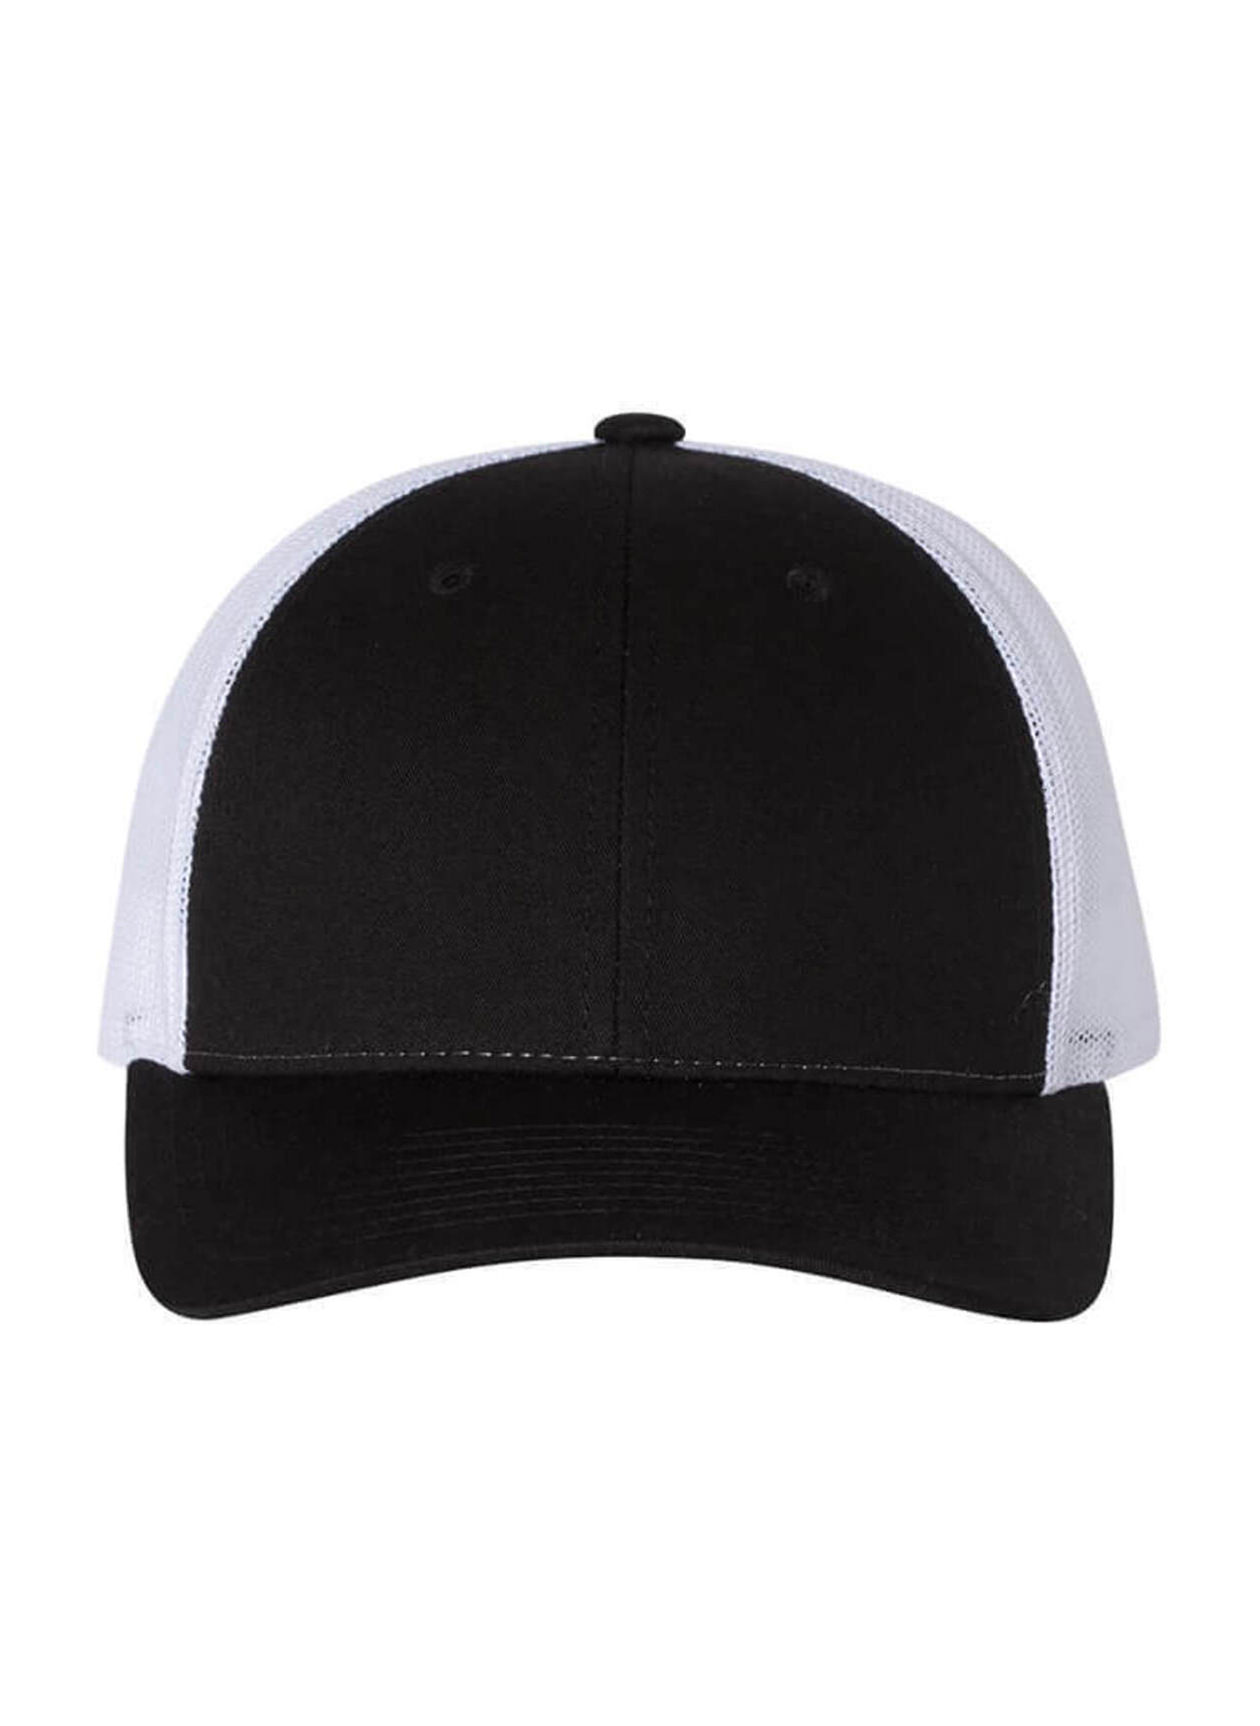 Richardson Black / White Low Pro Trucker Hat